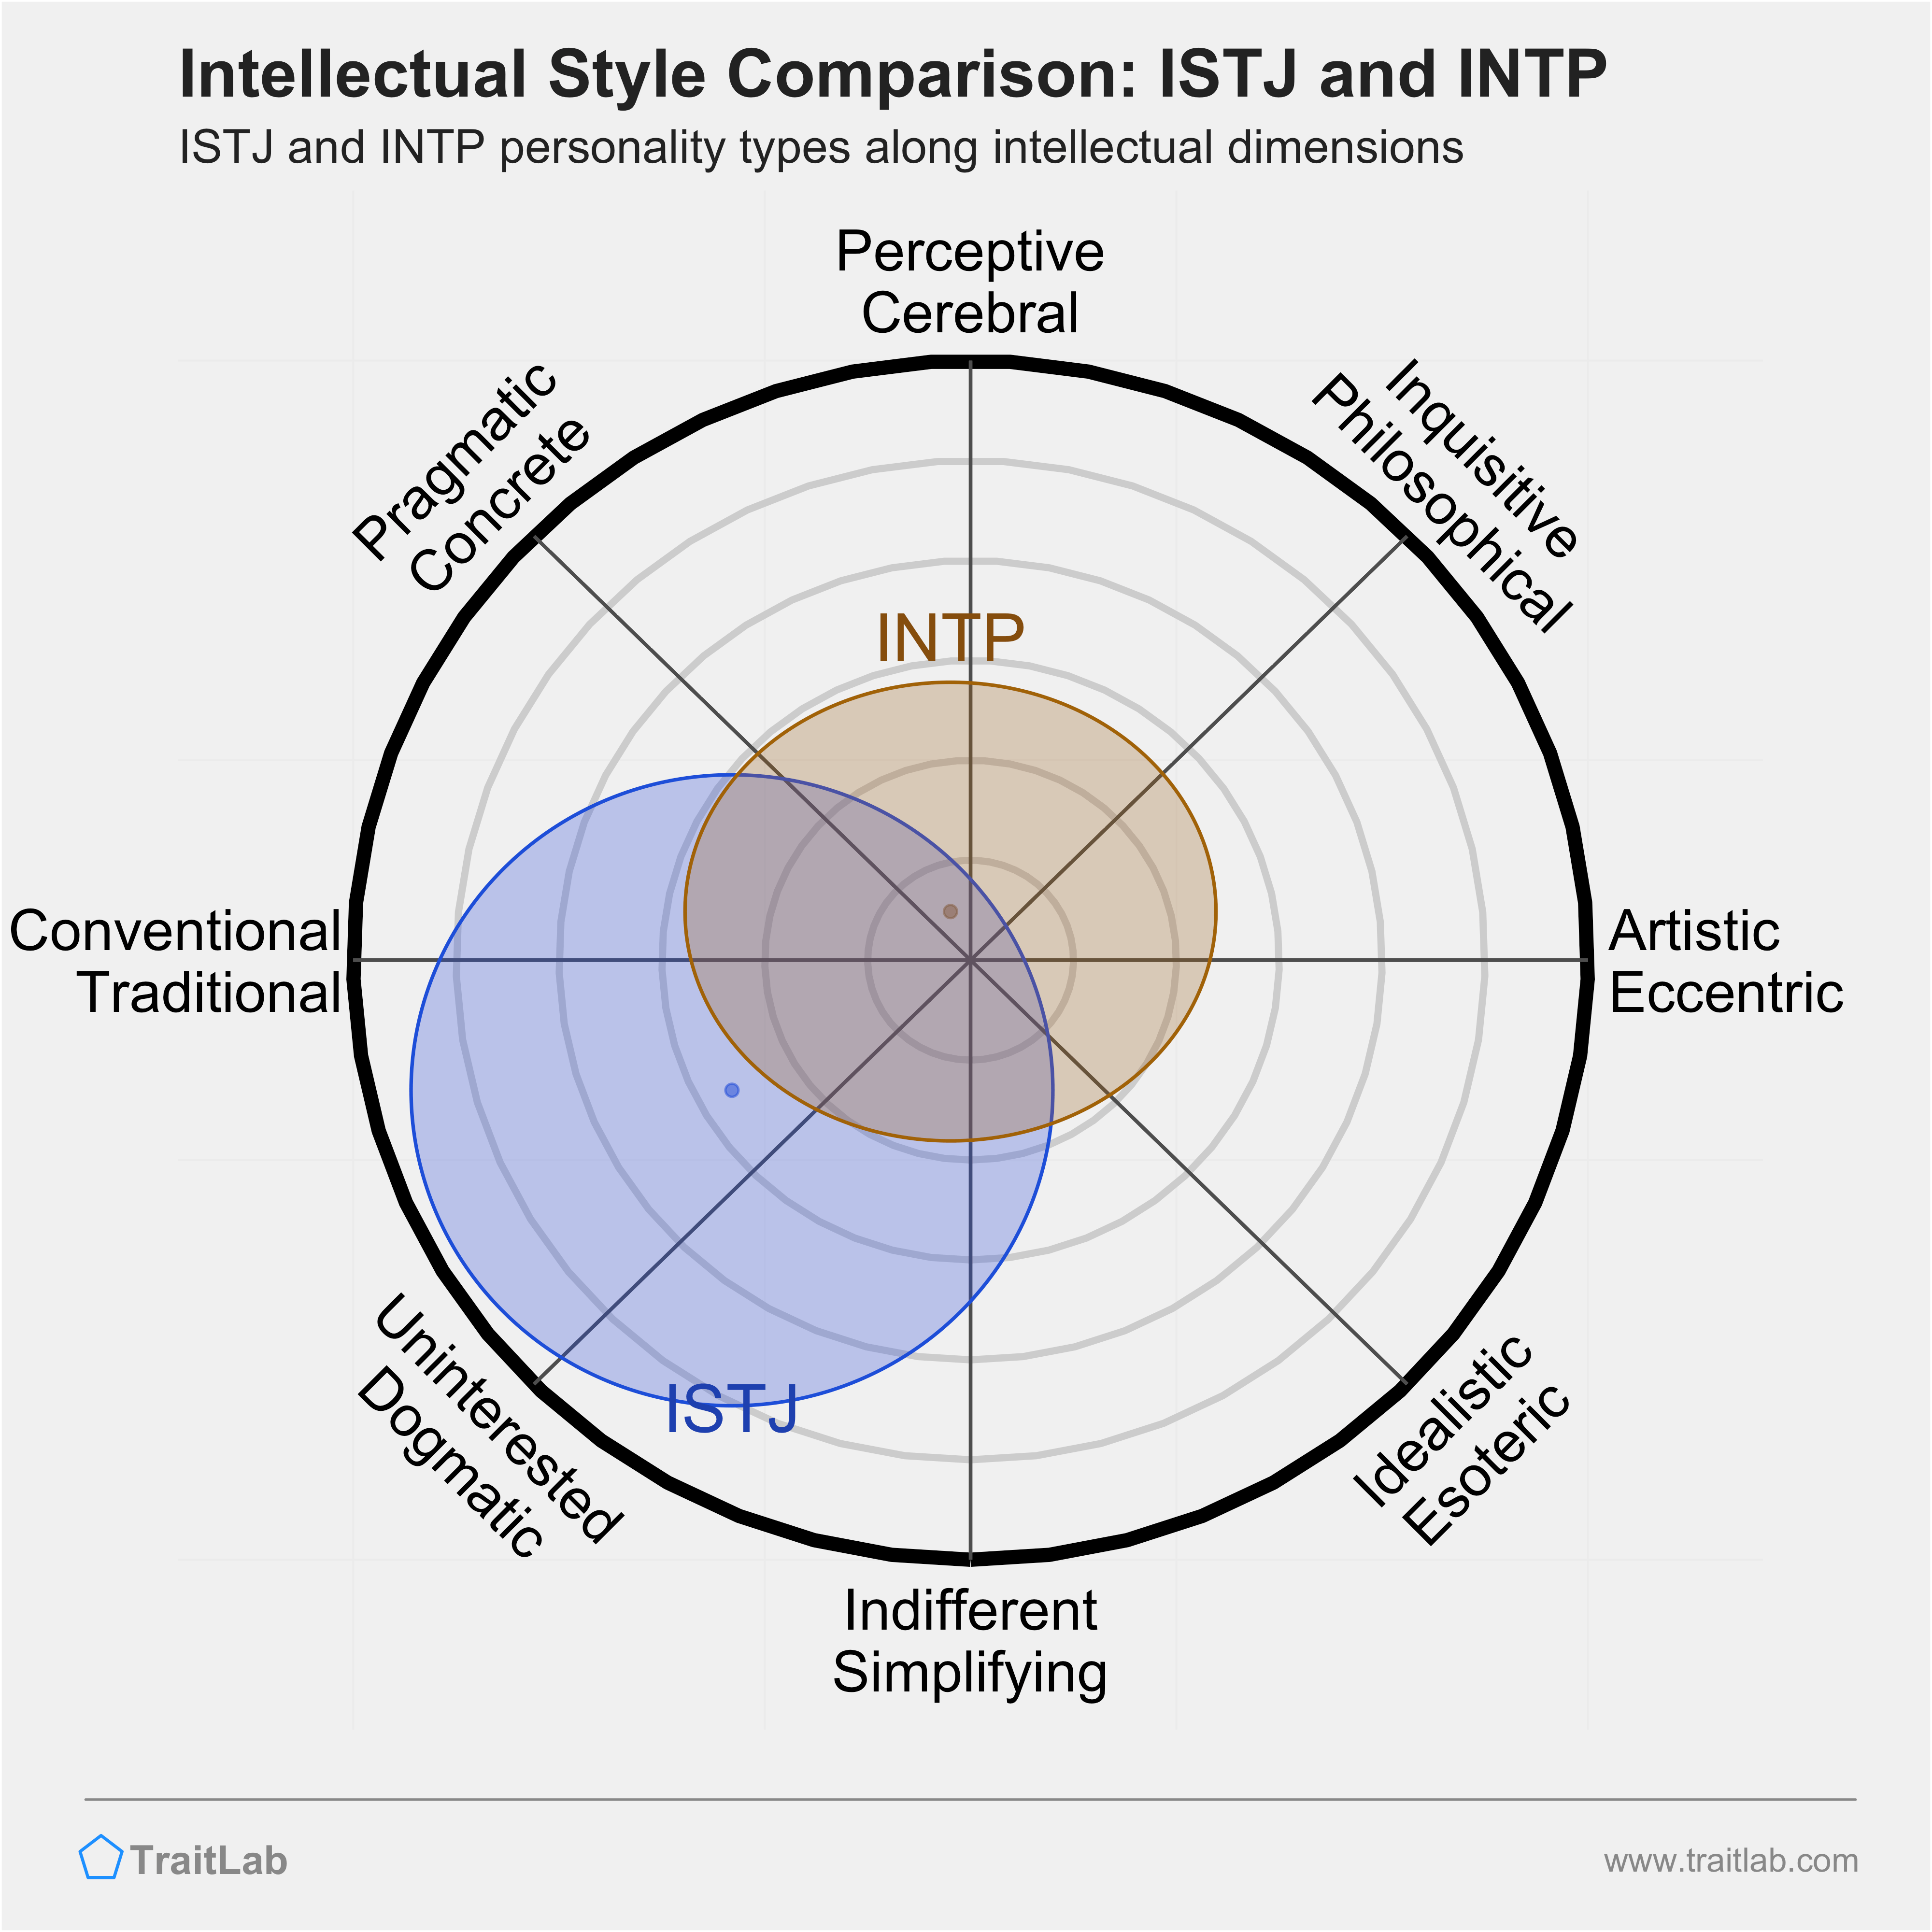 ISTJ and INTP comparison across intellectual dimensions